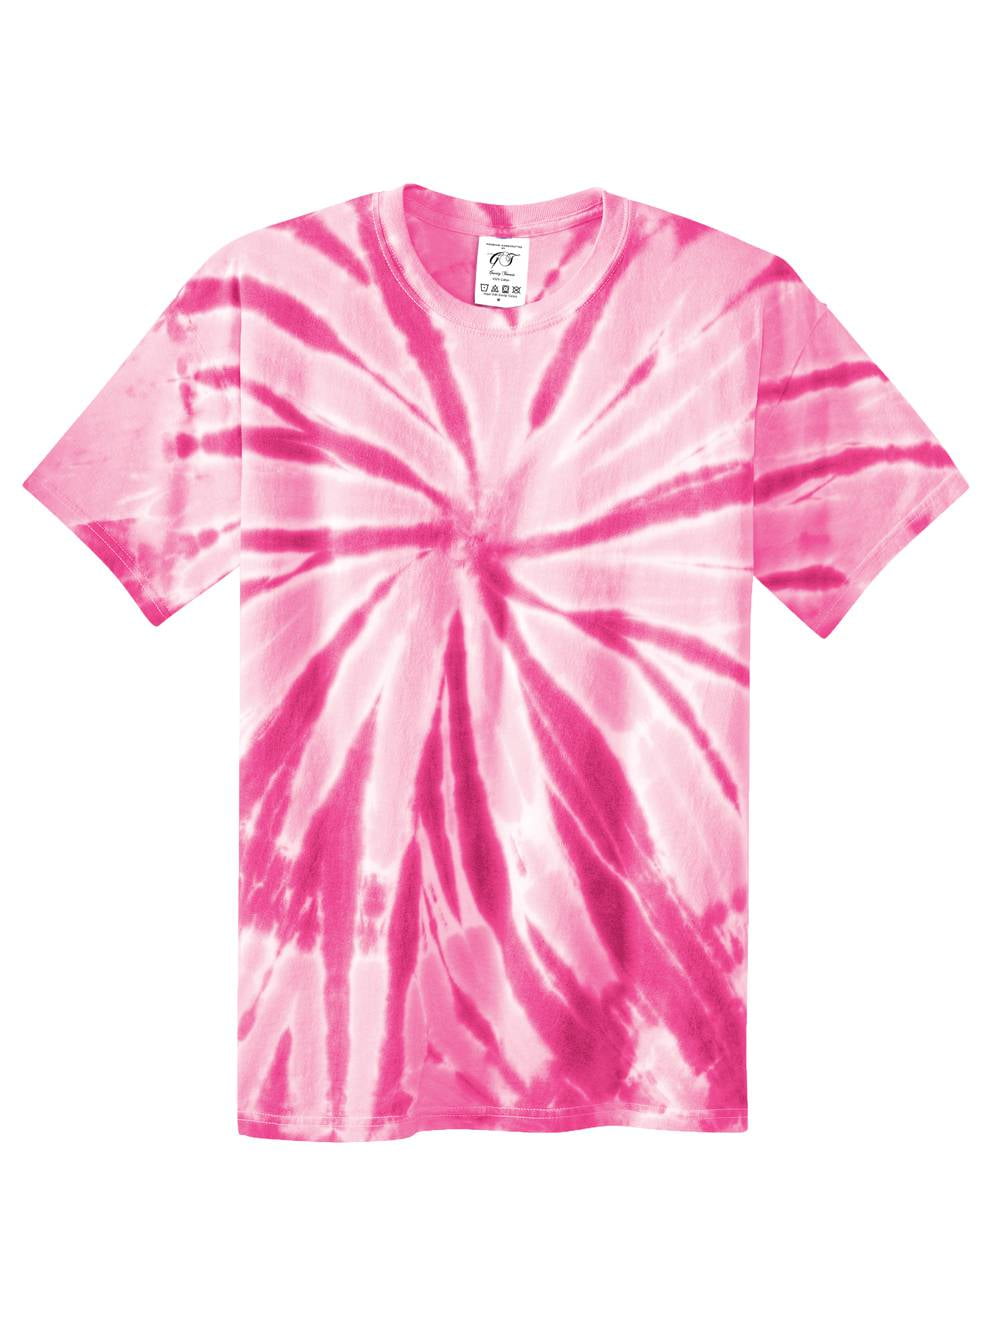 Pink crumble tie dye t-shirt men's size small